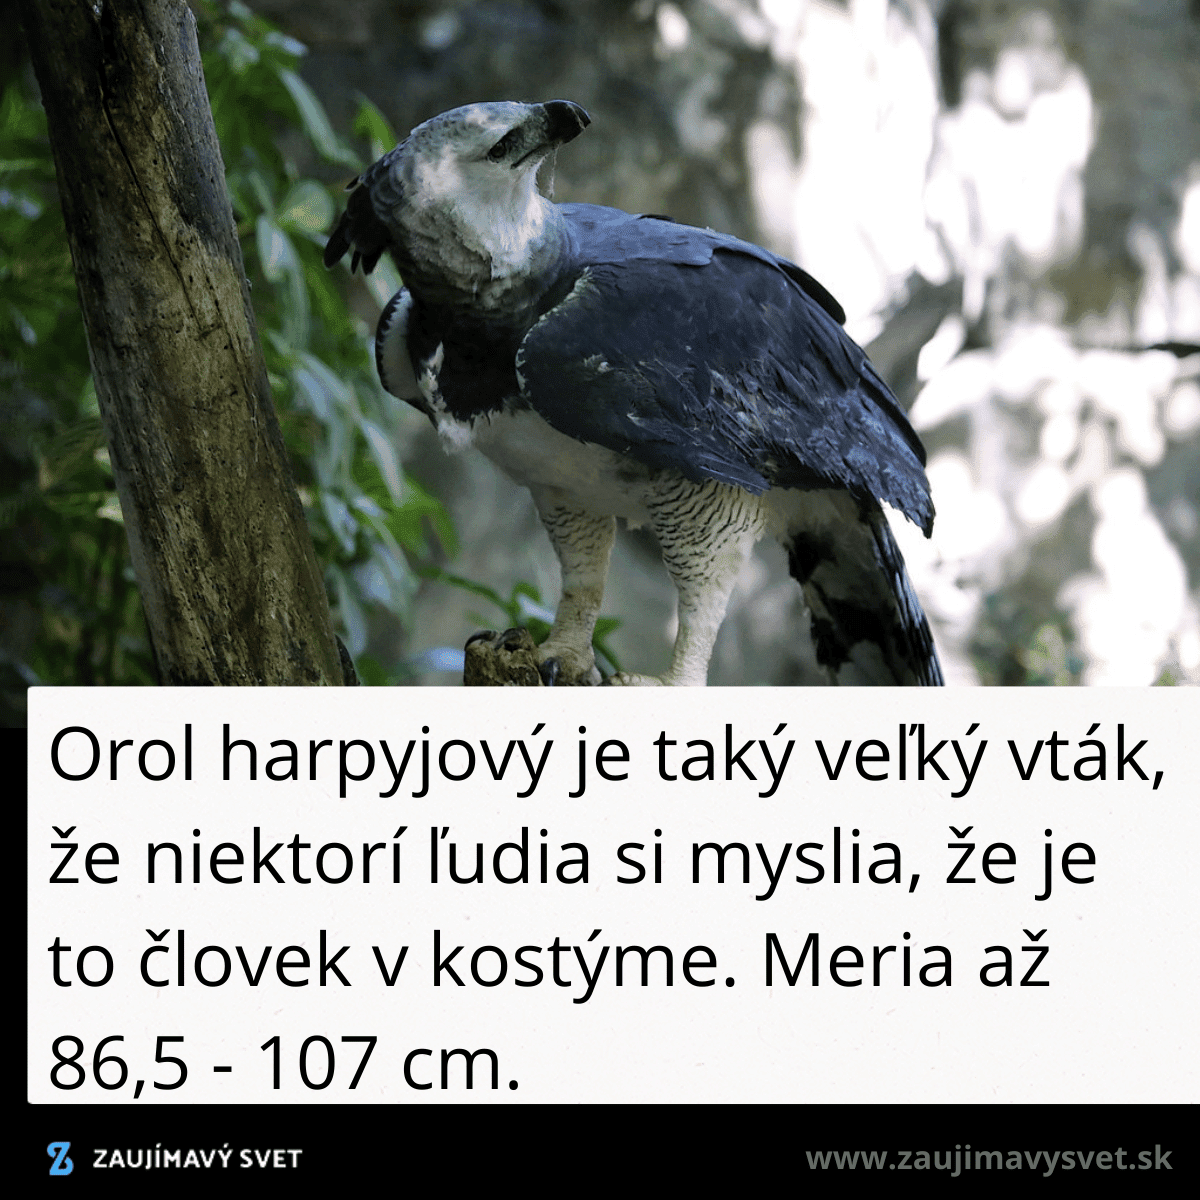 harpy eagle